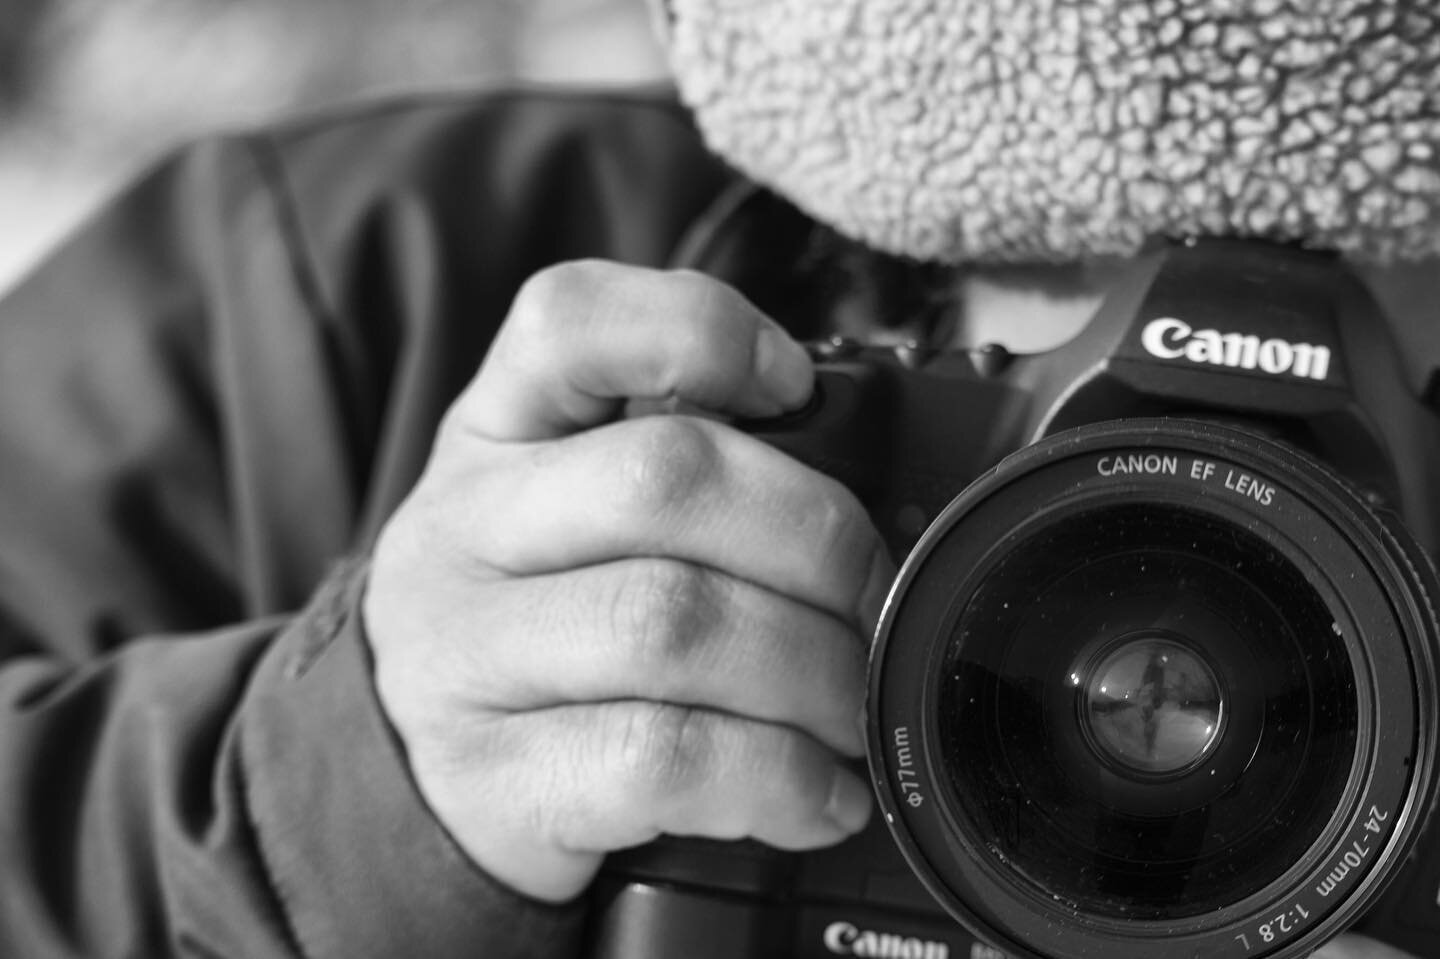 A Man and His Camera
01.03.2020
Route 112
New Hampshire 

#meuamor #portrait #closeup #explore #photography #travel #camera #foto #fotografia #winter #m&atilde;os #hands #newhampshire #kancamagus #NH #explorenature #c&acirc;mera #aventureiros #canon 